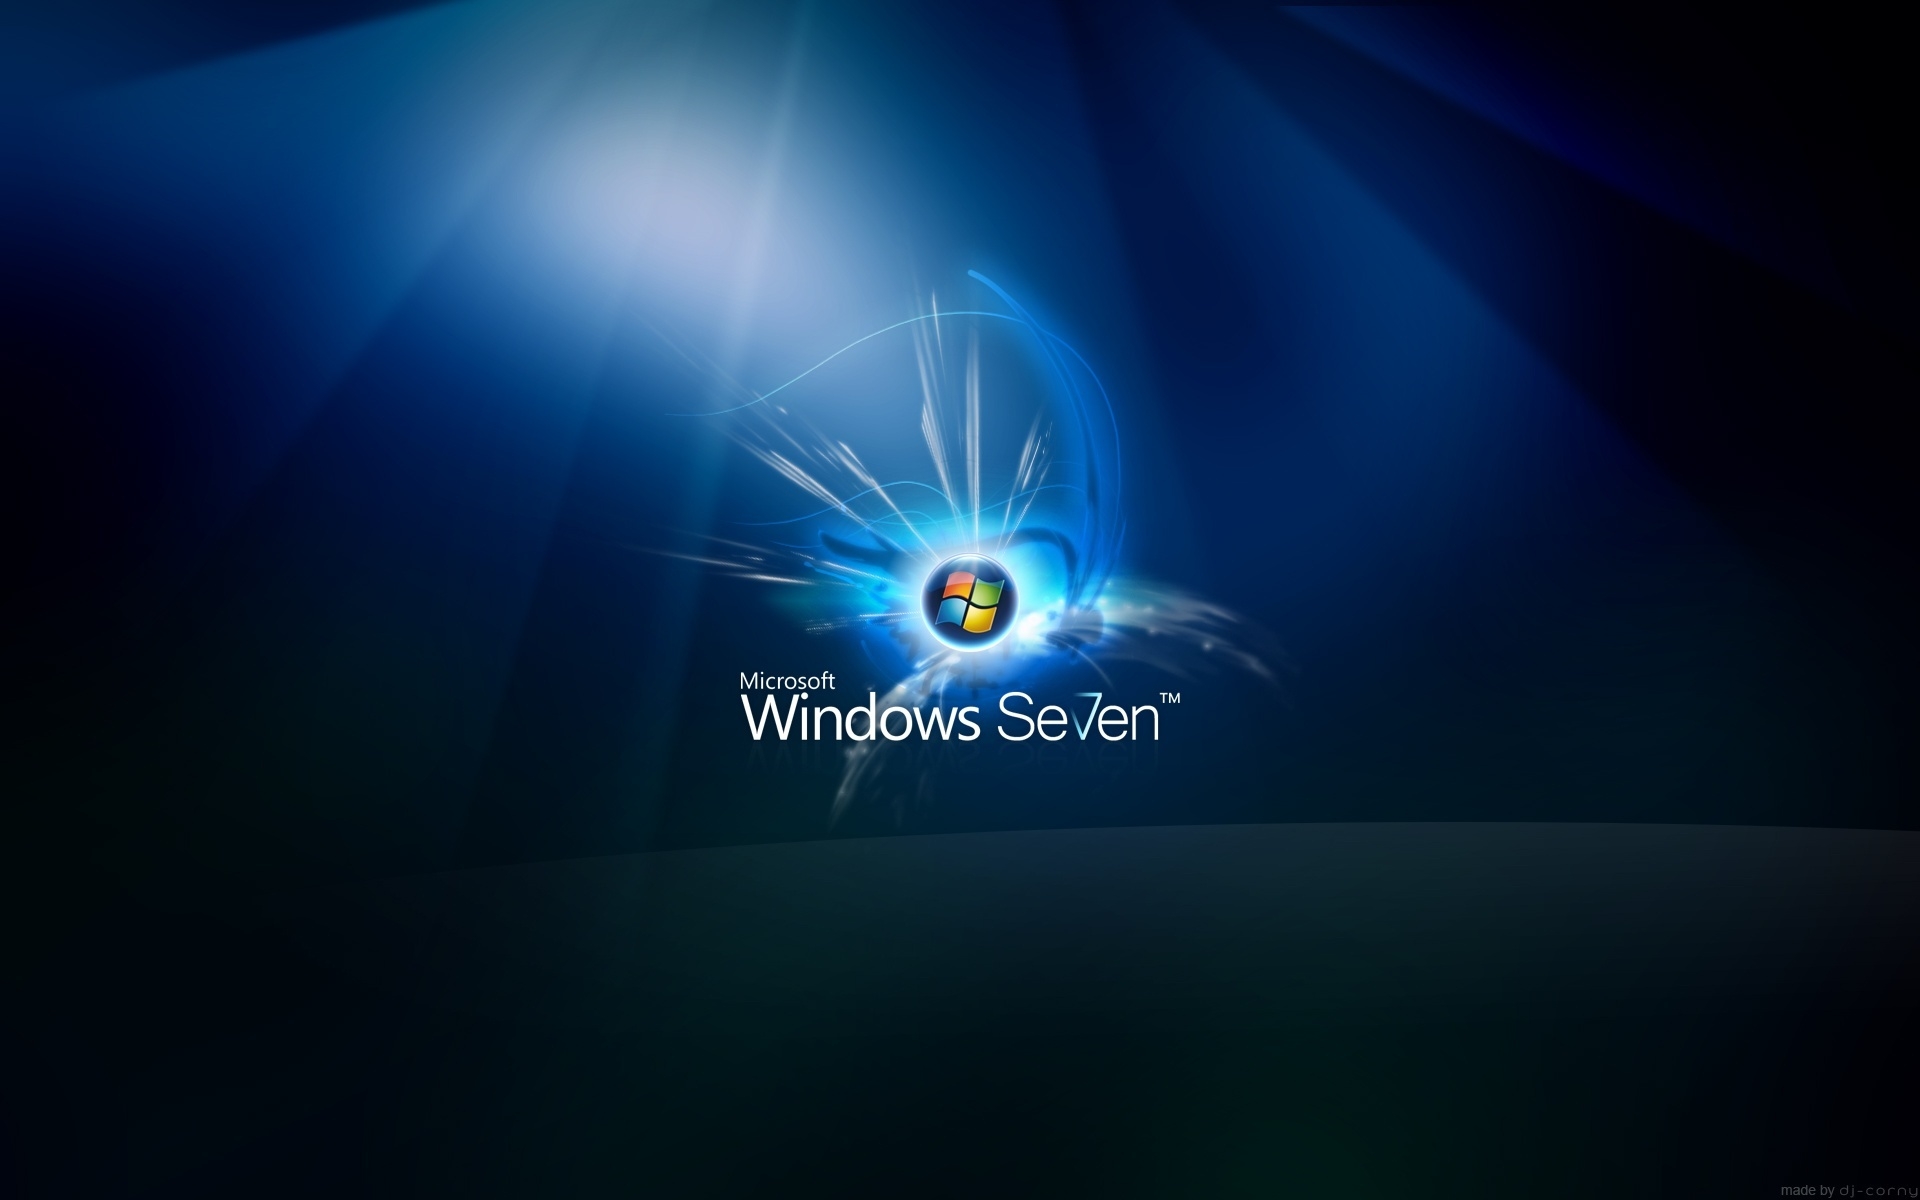 Windows Seven Glow for 1920 x 1200 widescreen resolution